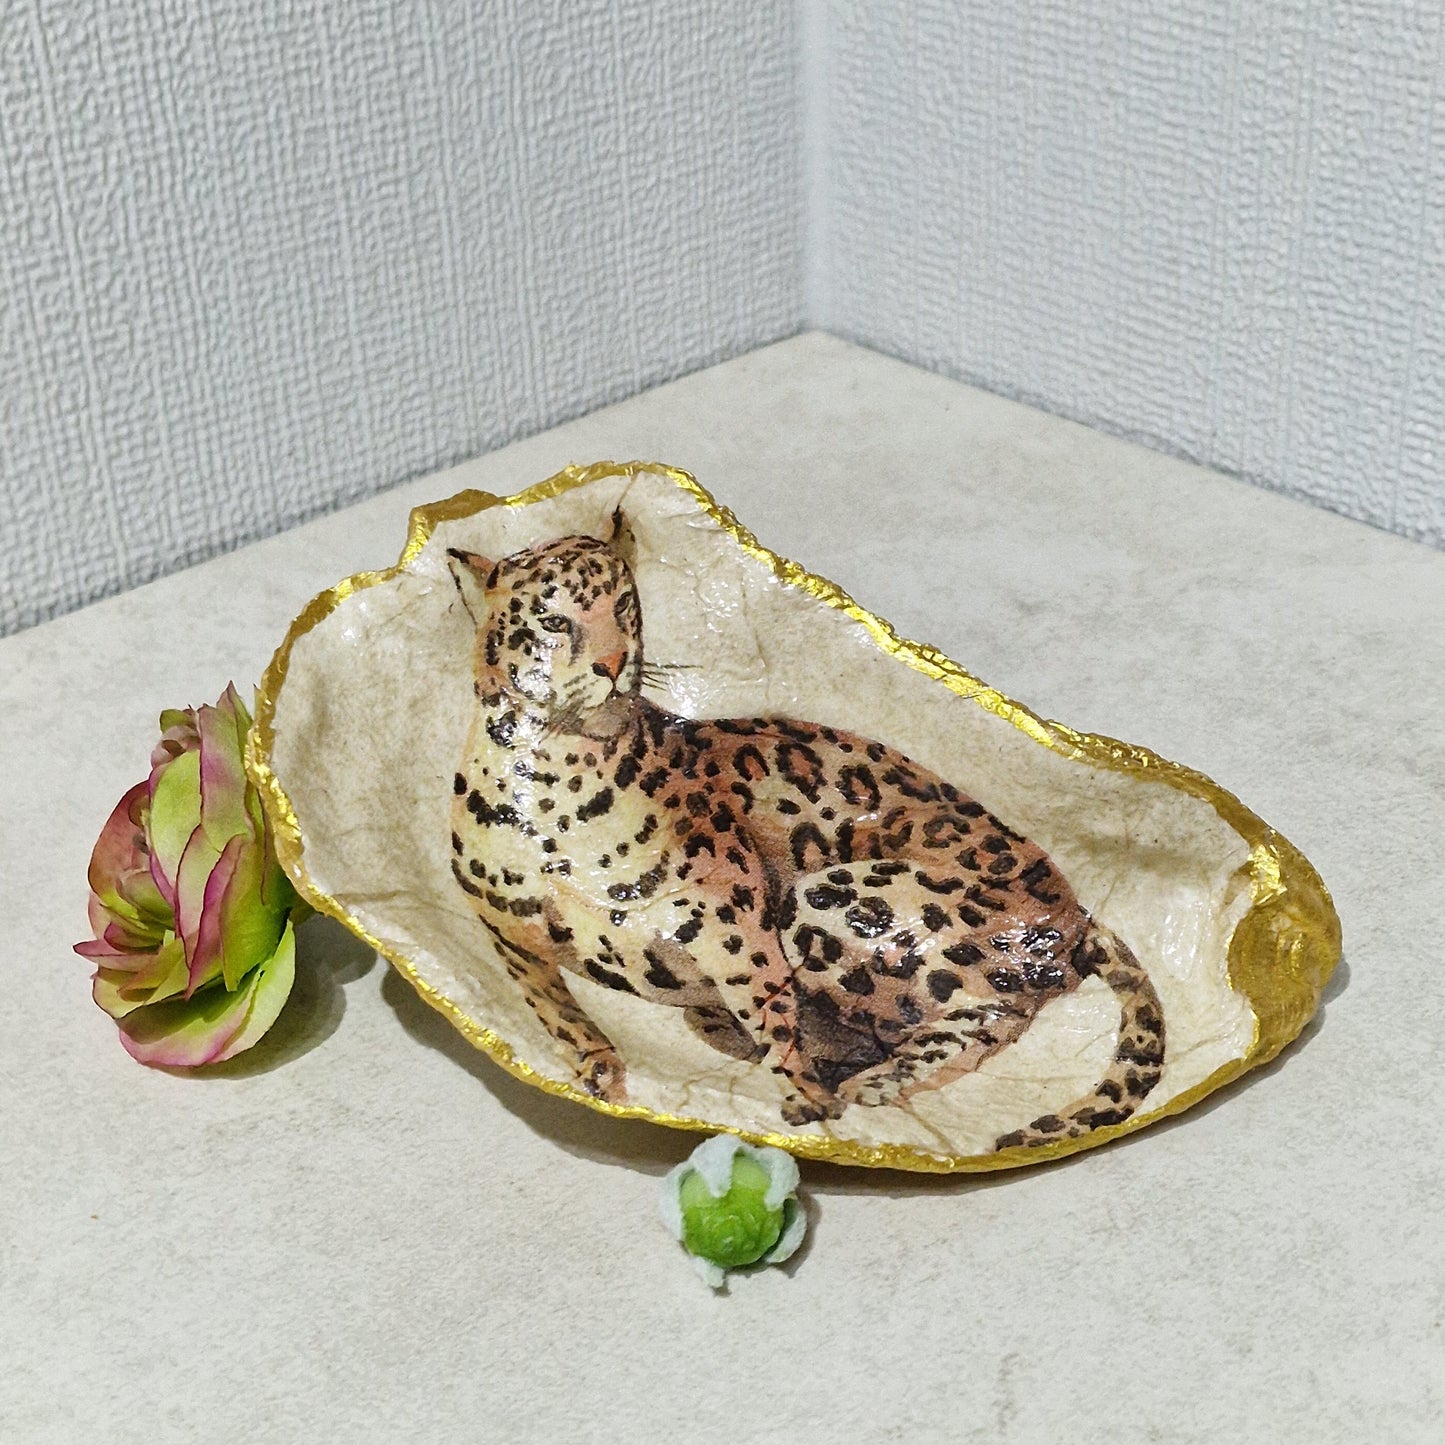 NEW Big Cats Cheetah Leopard Oyster Shell Trinket Dish Gift